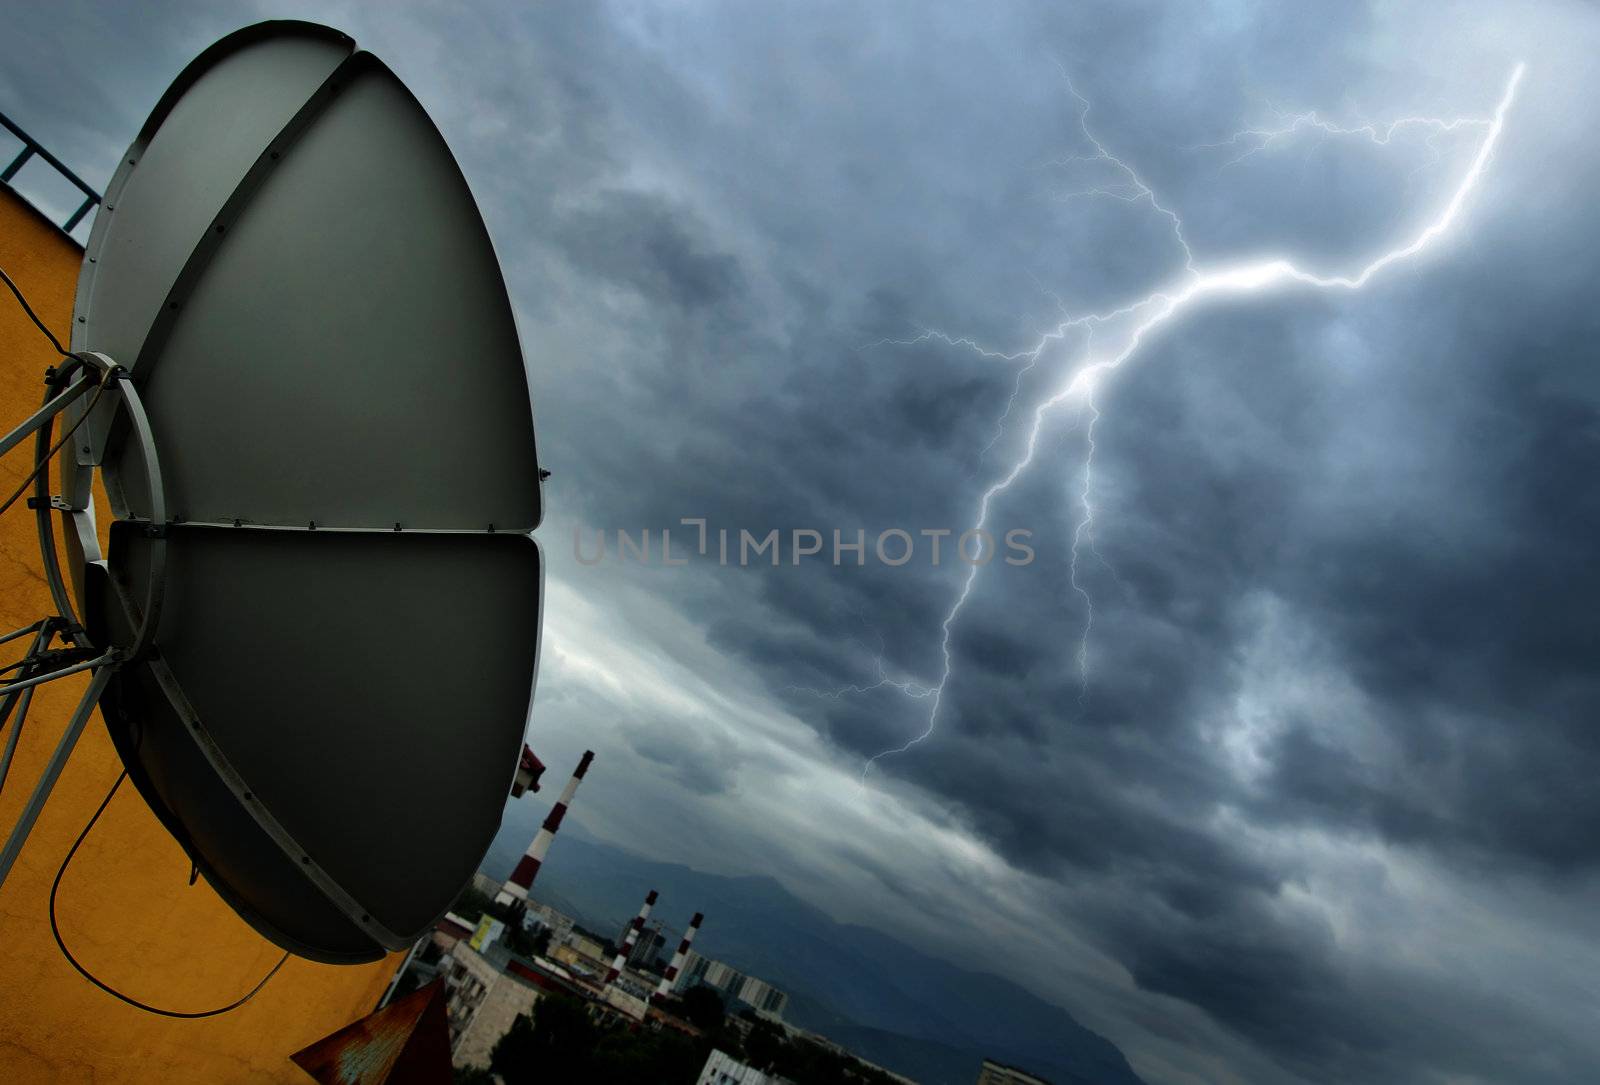 Creative photo of the high-tech parabolic antenna and lightning